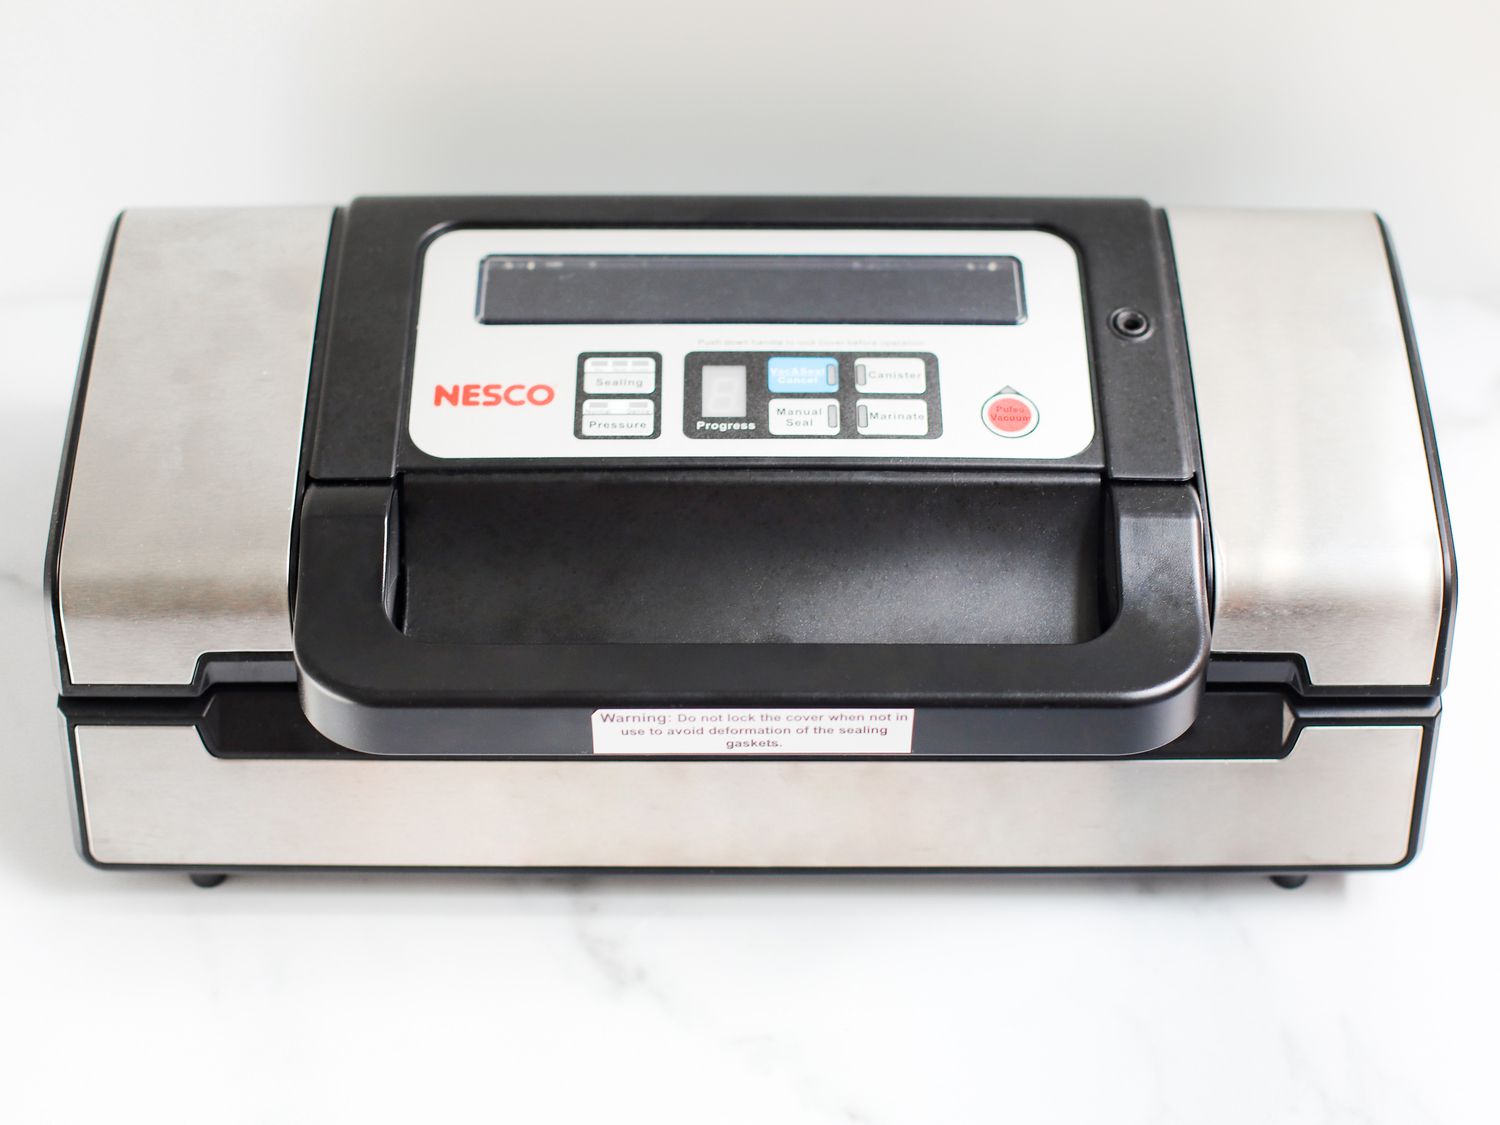 Nesco vacuum sealer on a marble countertop